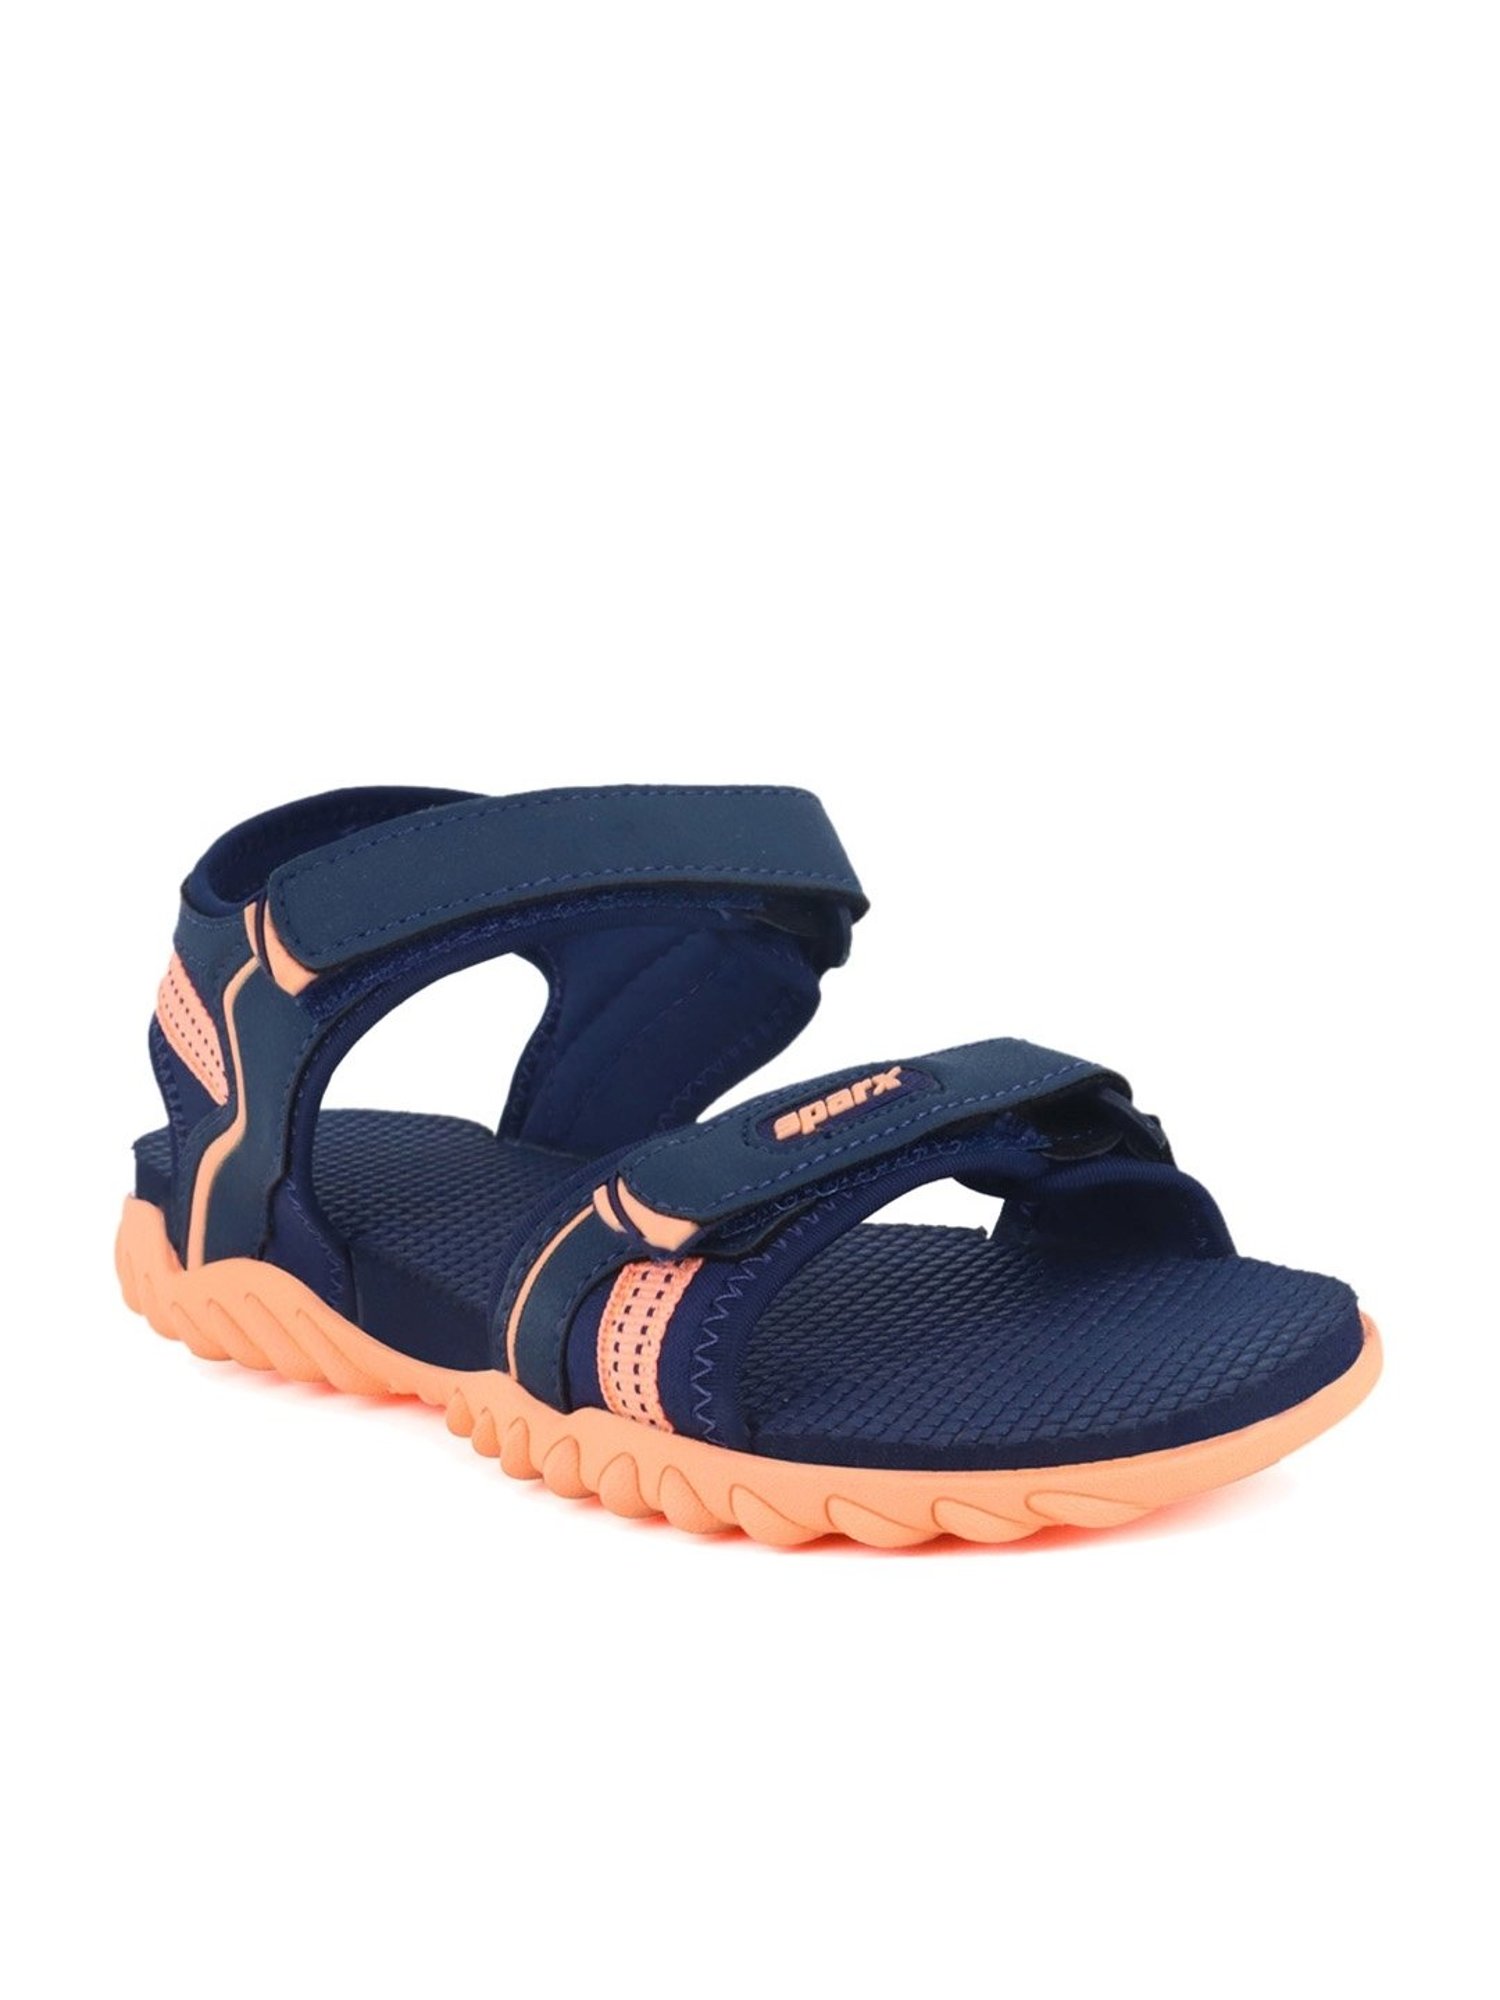 2021 new model fashion flat sandal| Alibaba.com